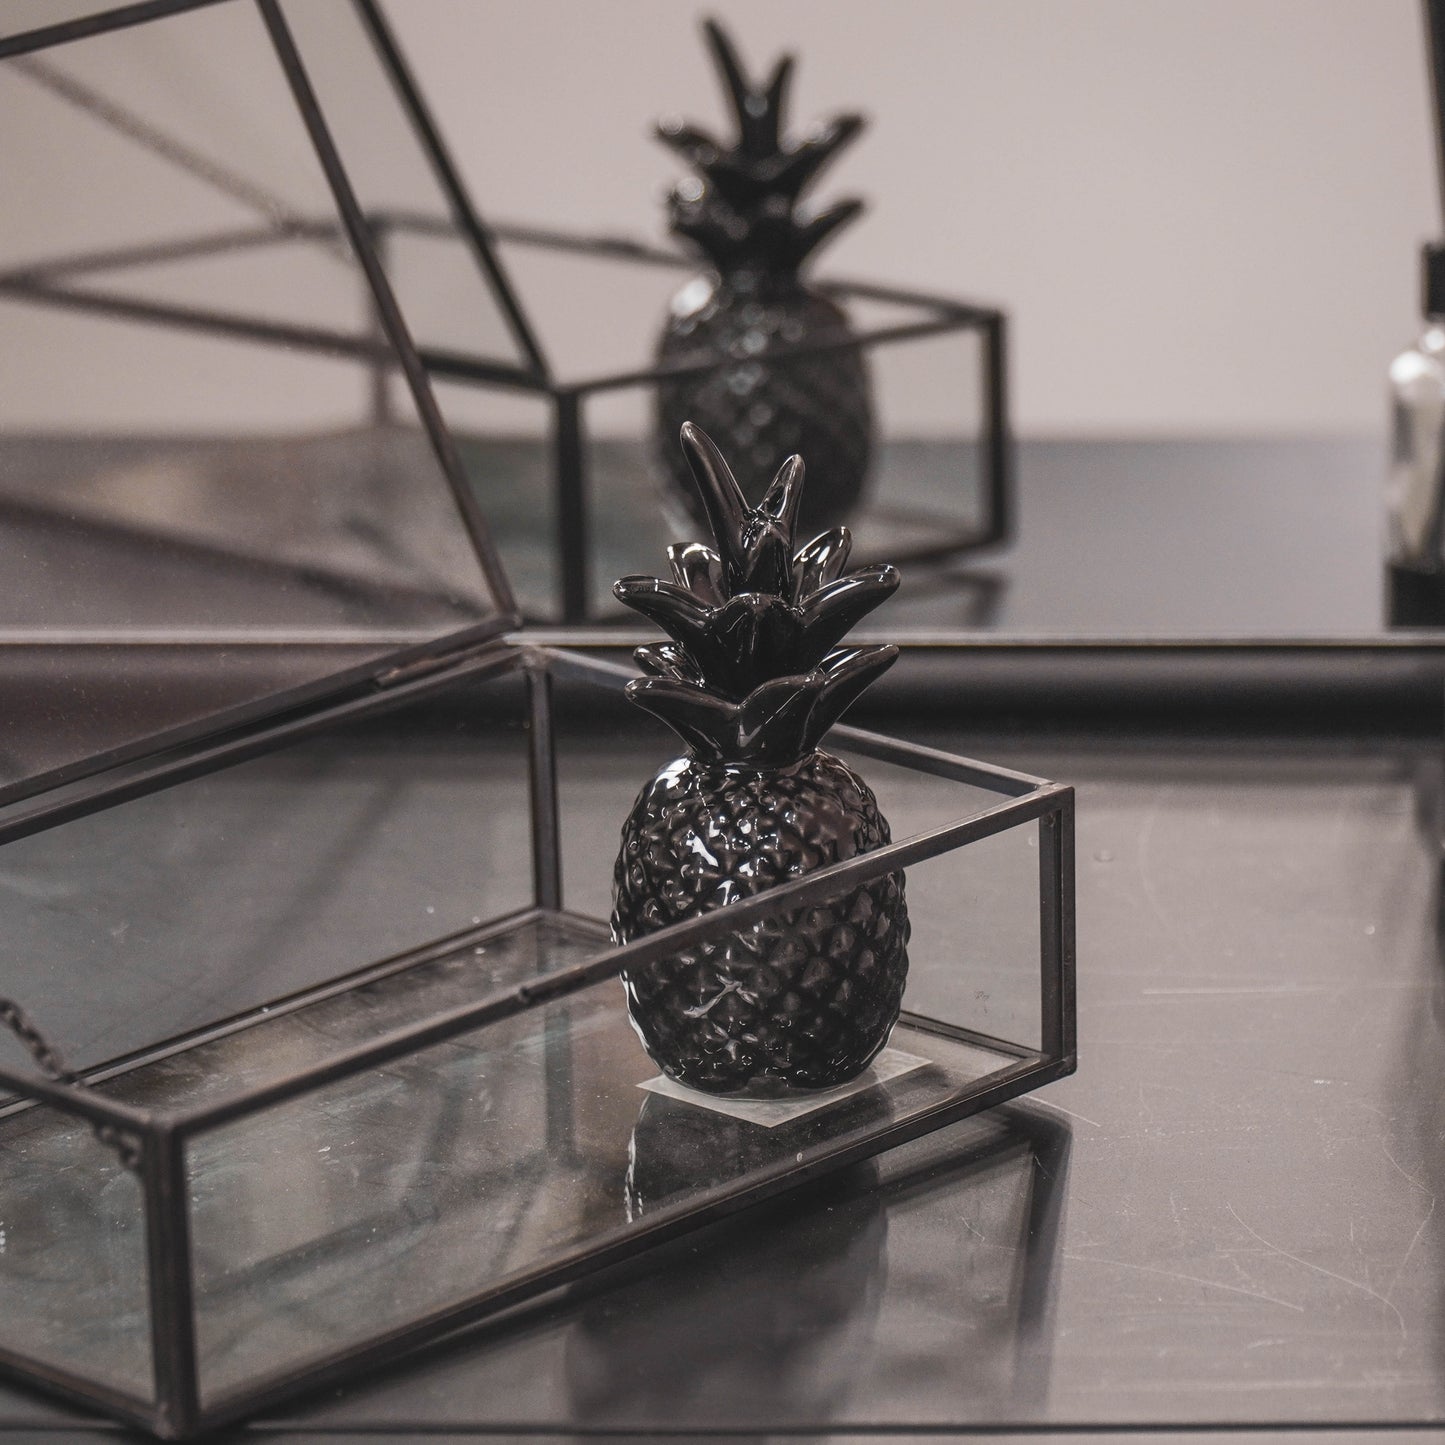 HV Pineapple Black - 5x5x11 cm